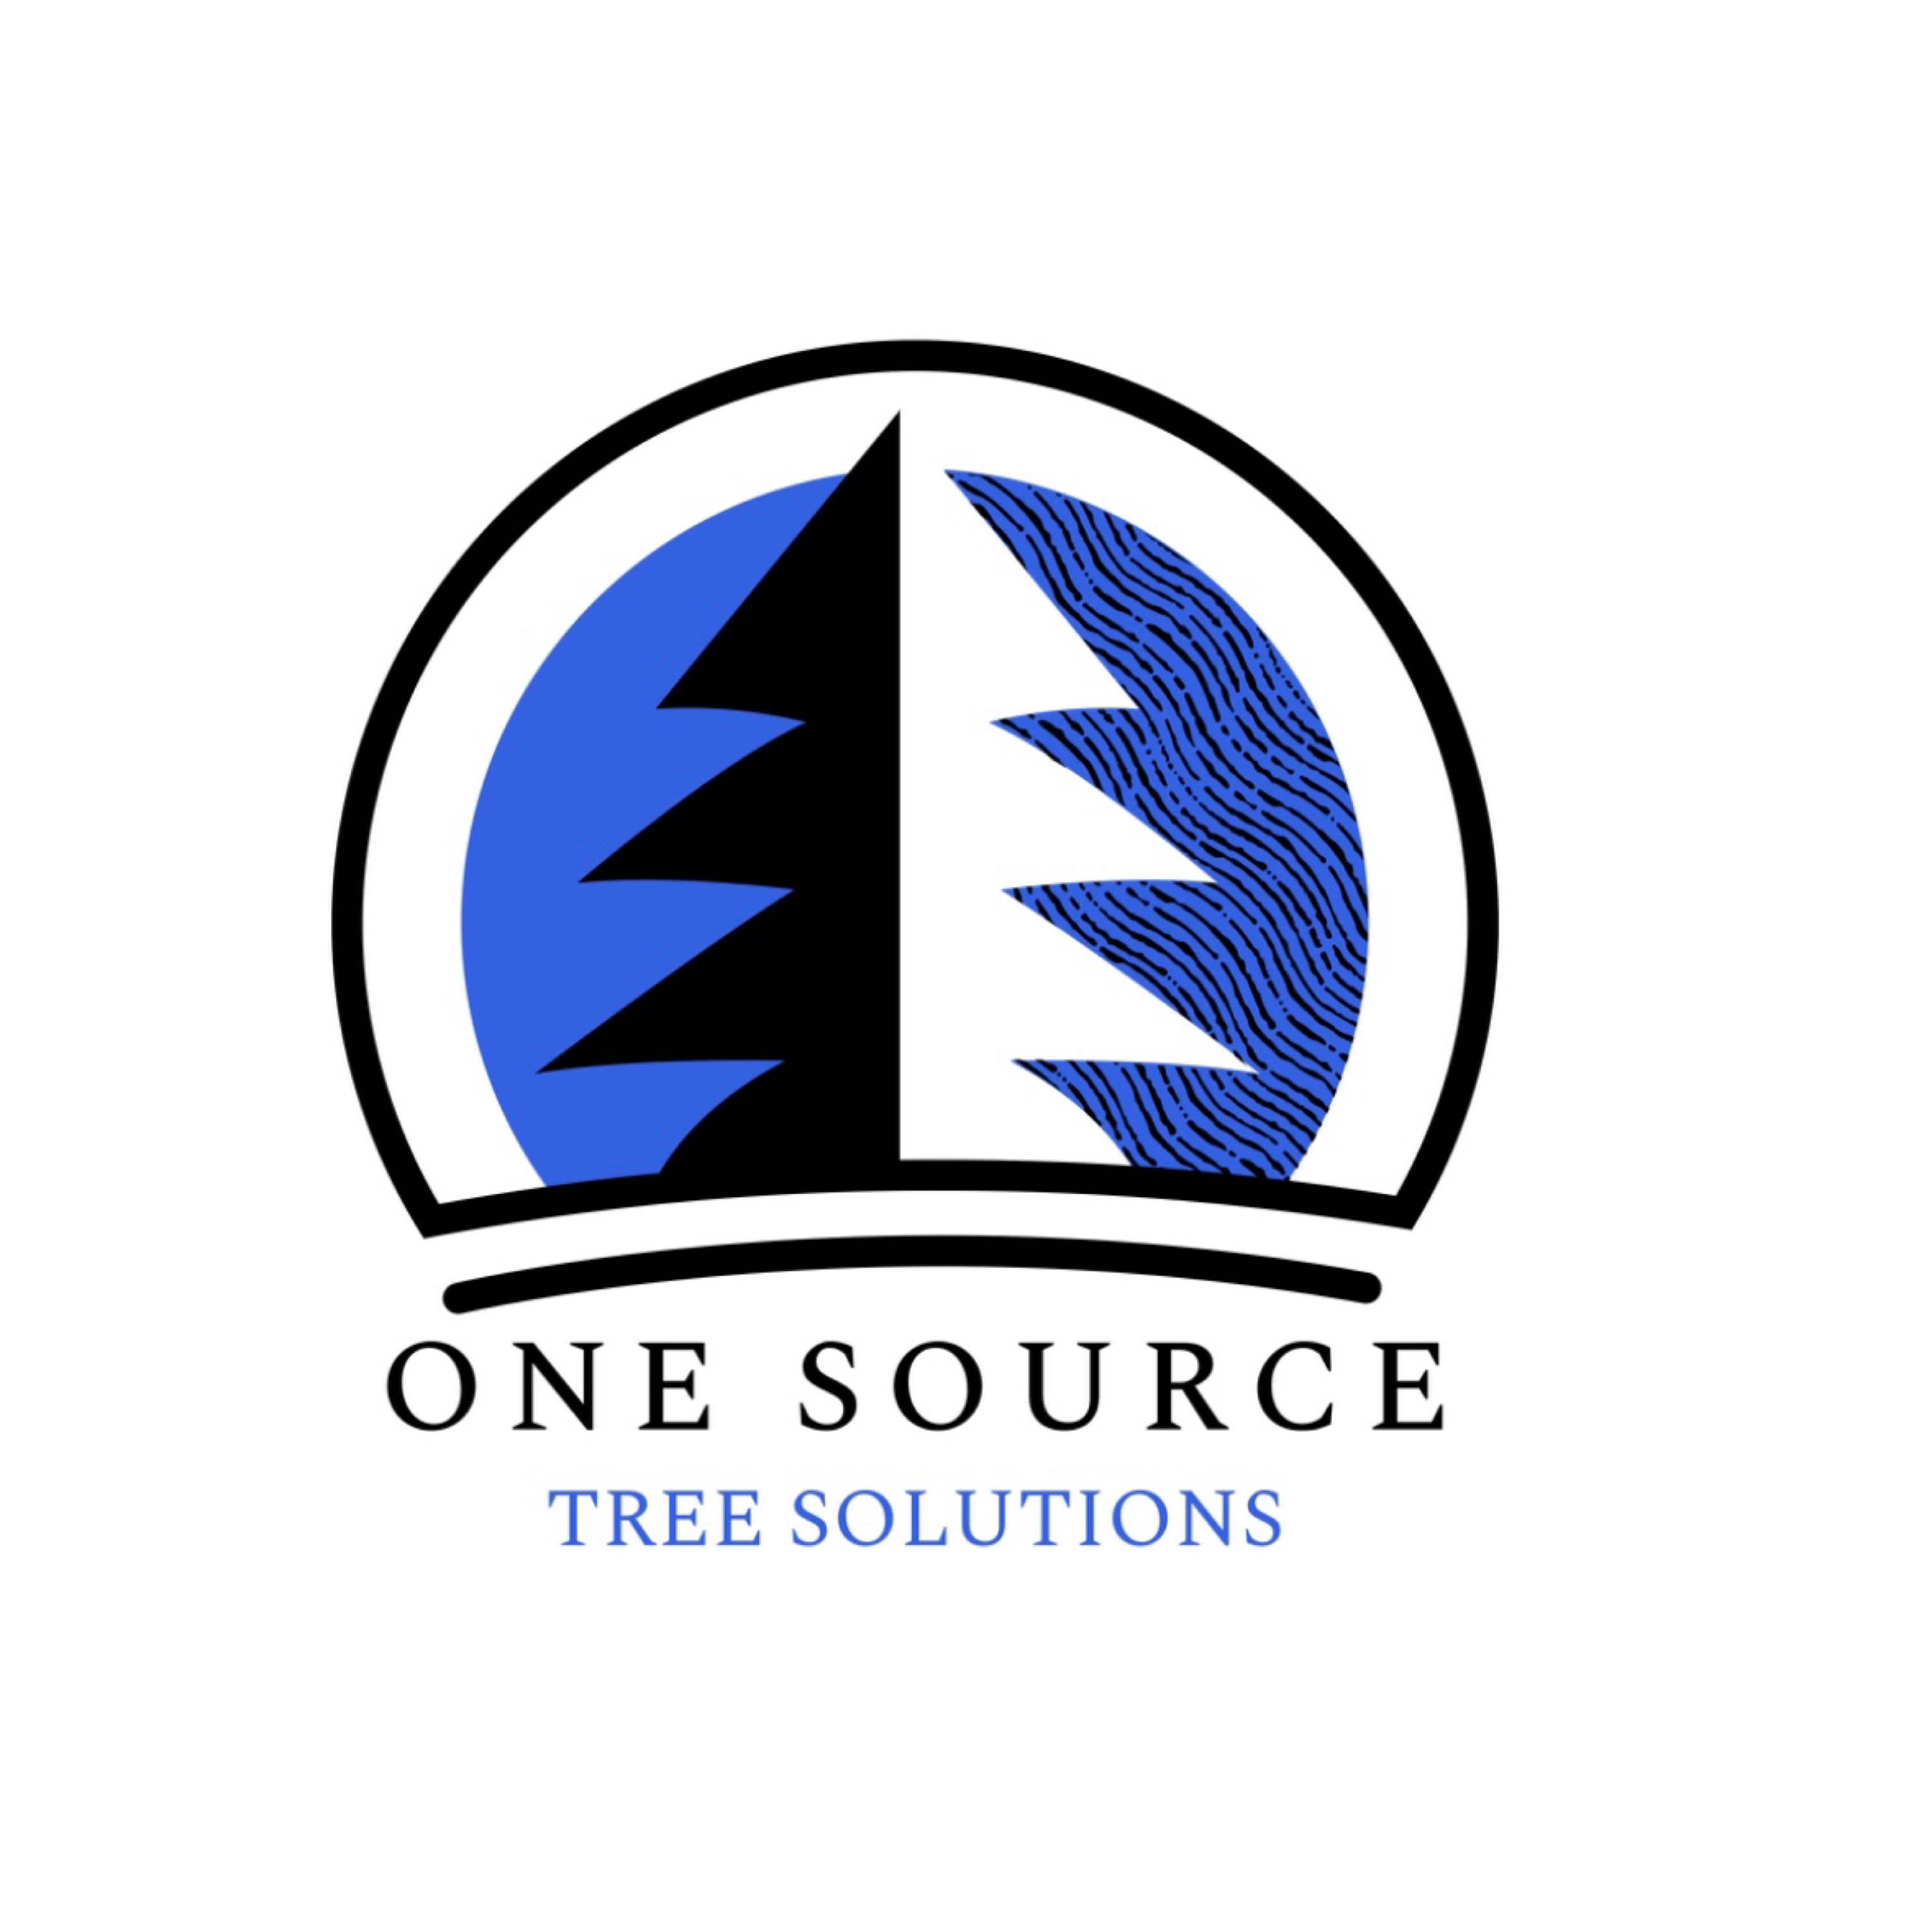 OneSource Solutions Logo